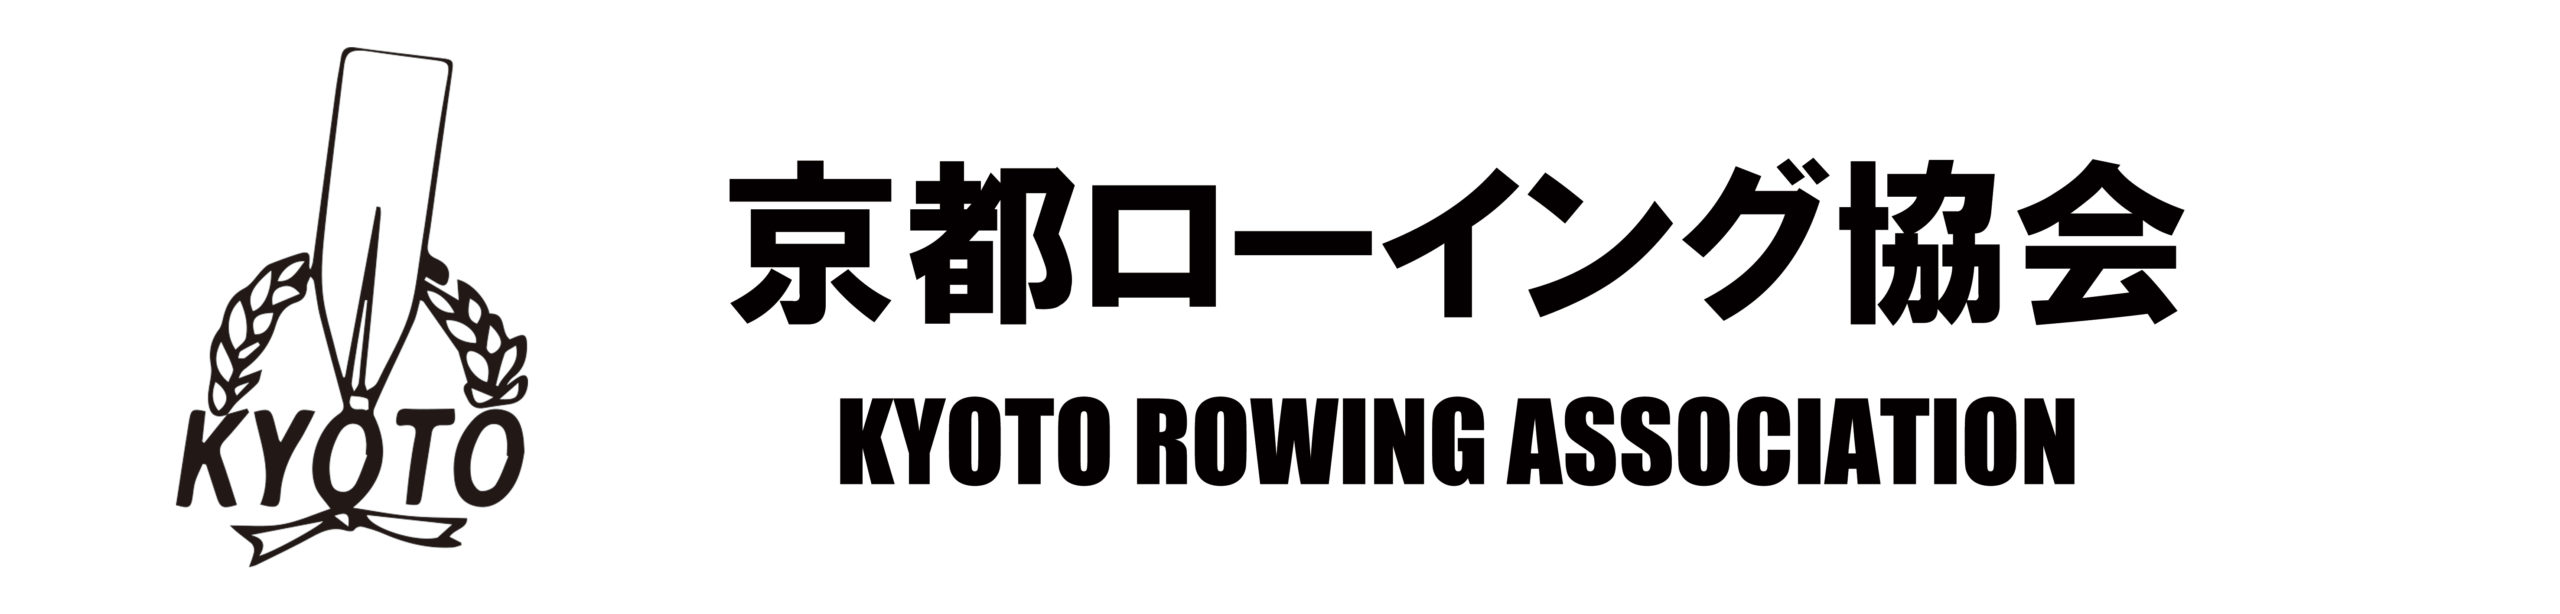 Kyoto Rowing Association